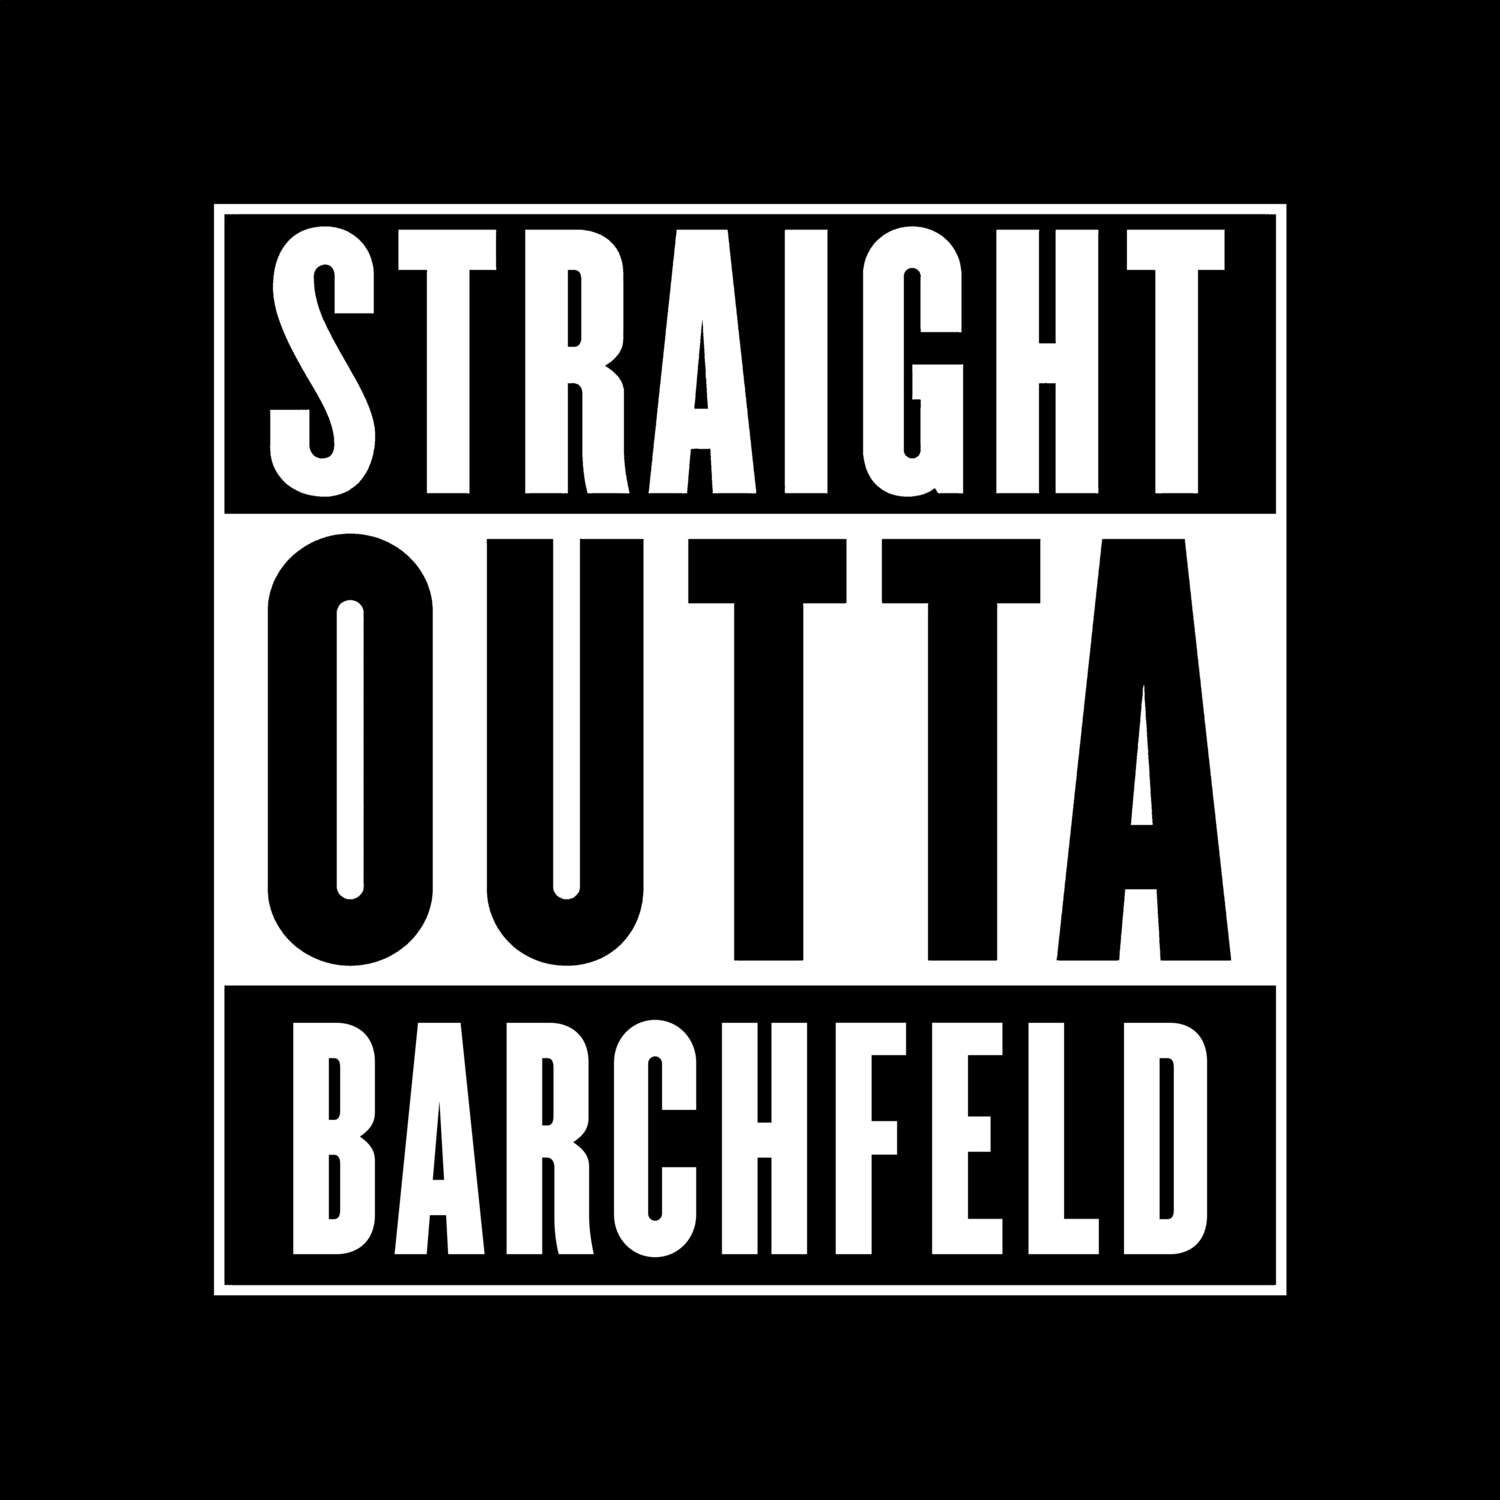 Barchfeld T-Shirt »Straight Outta«